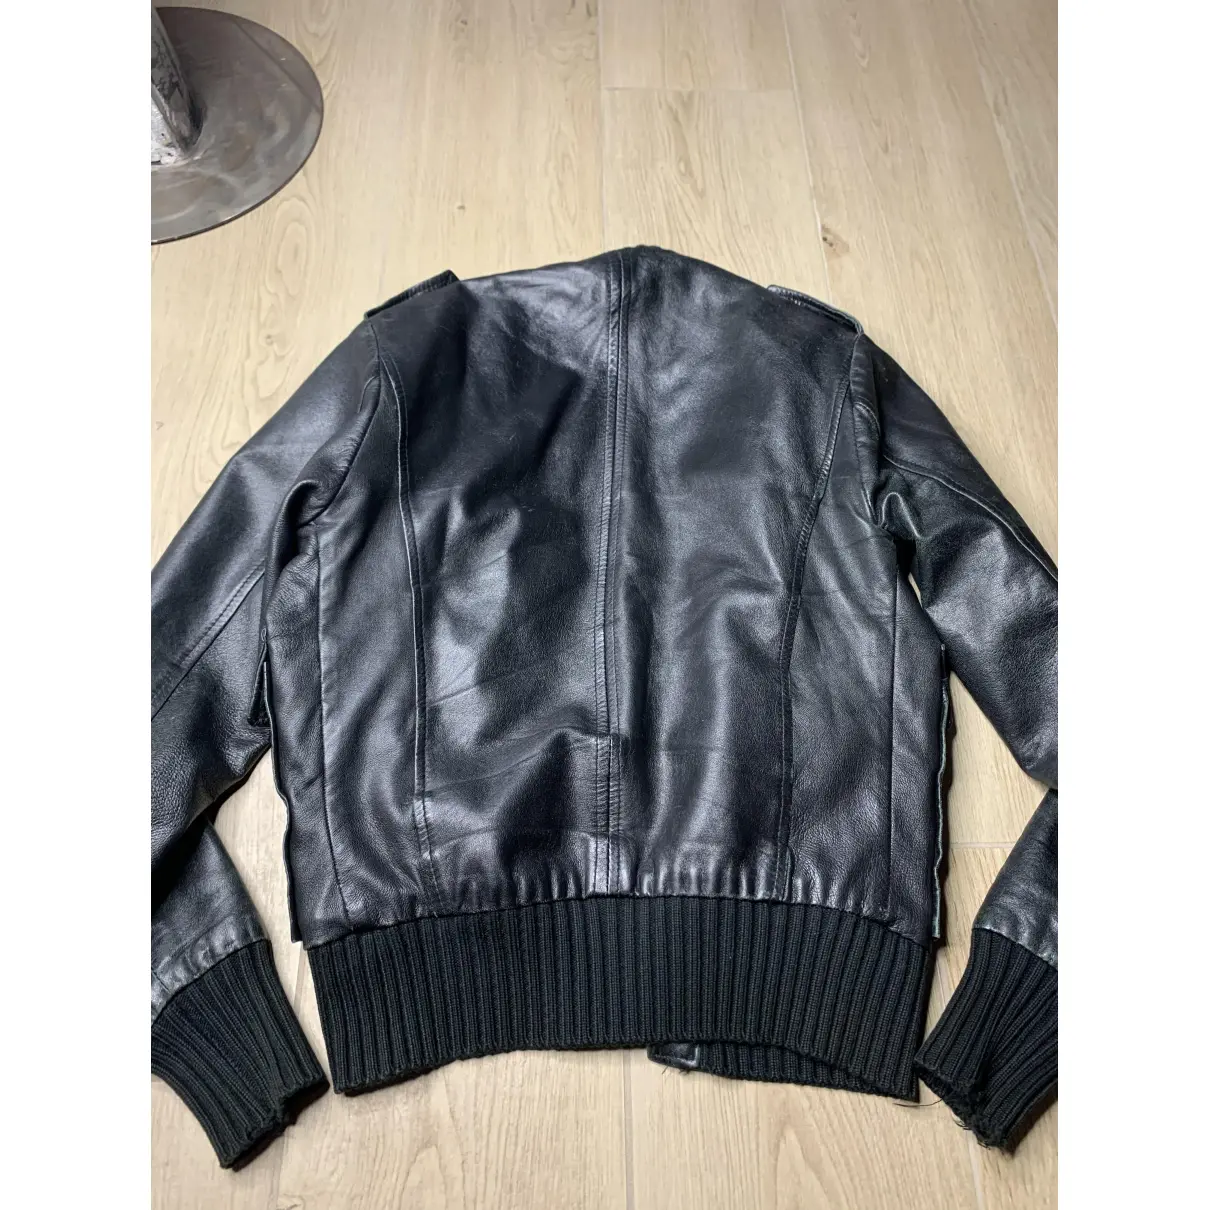 Buy Impérial Leather jacket online